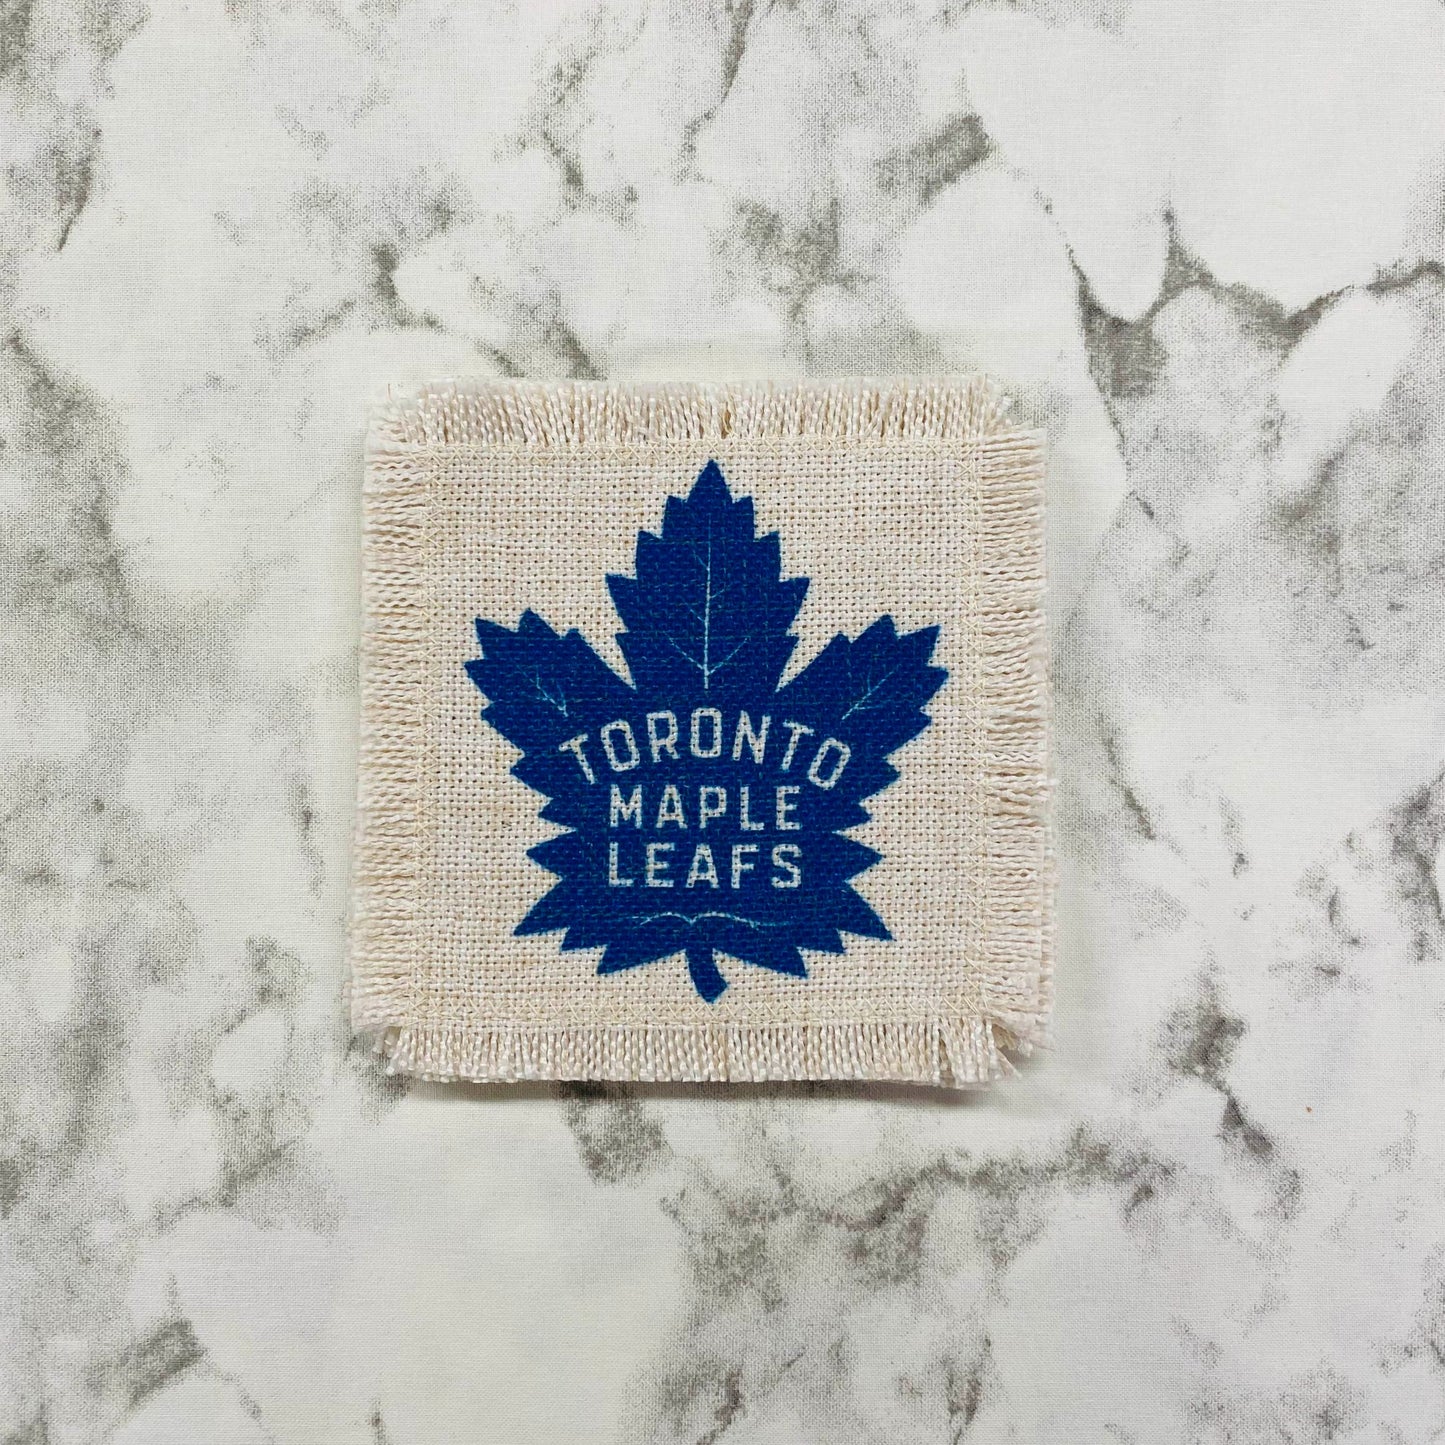 Toronto Maple Leafs Hockey Coasters, set of 4